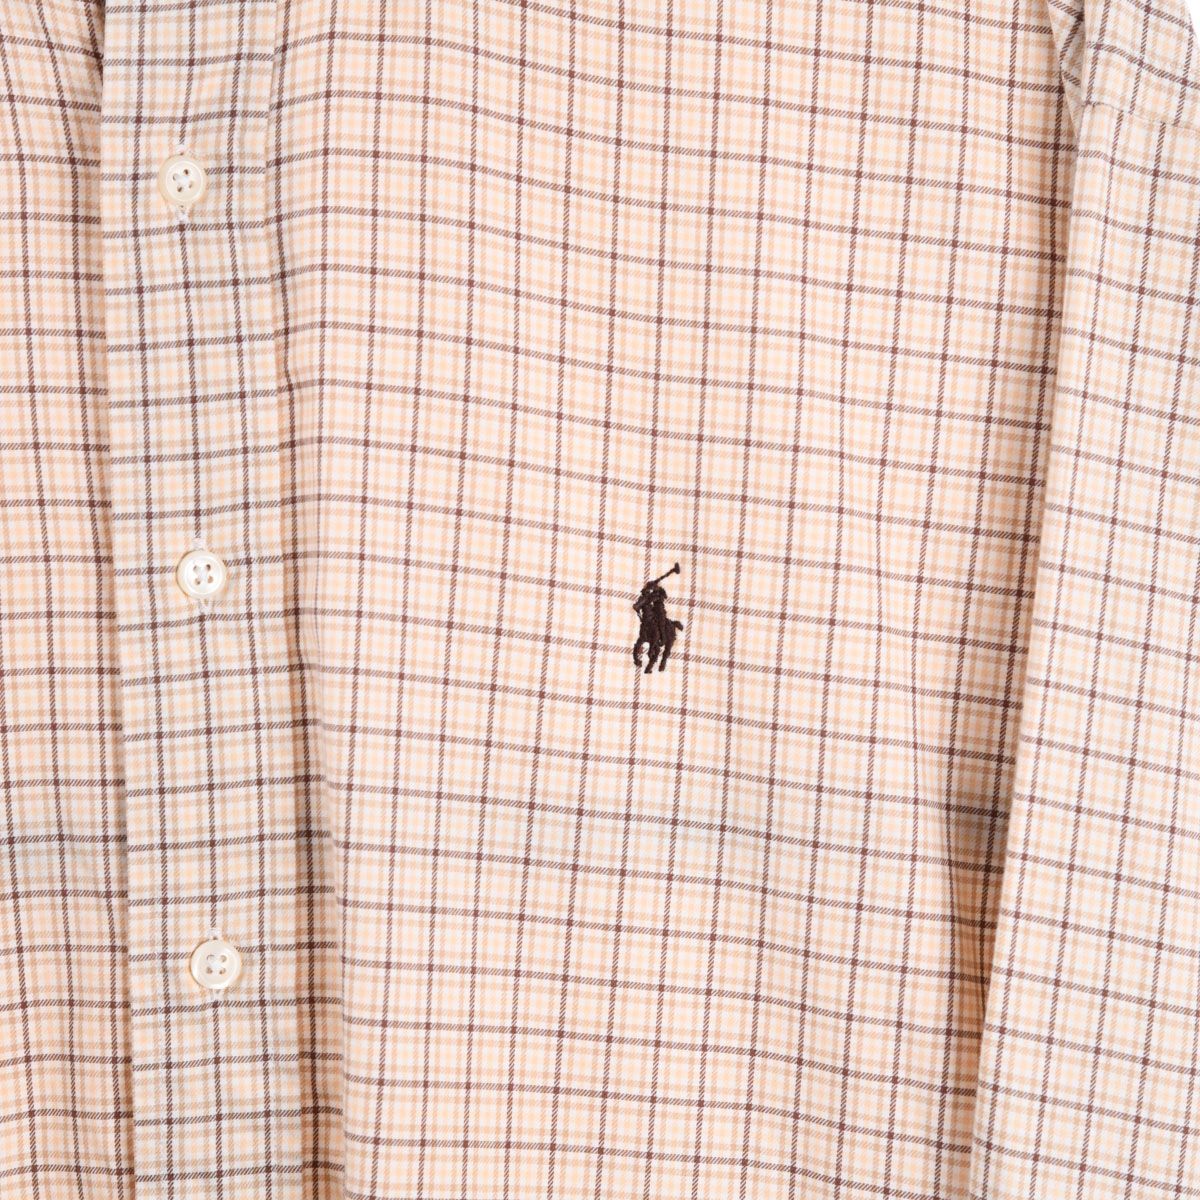 Ralph Lauren Blake Chequered Pattern Shirt